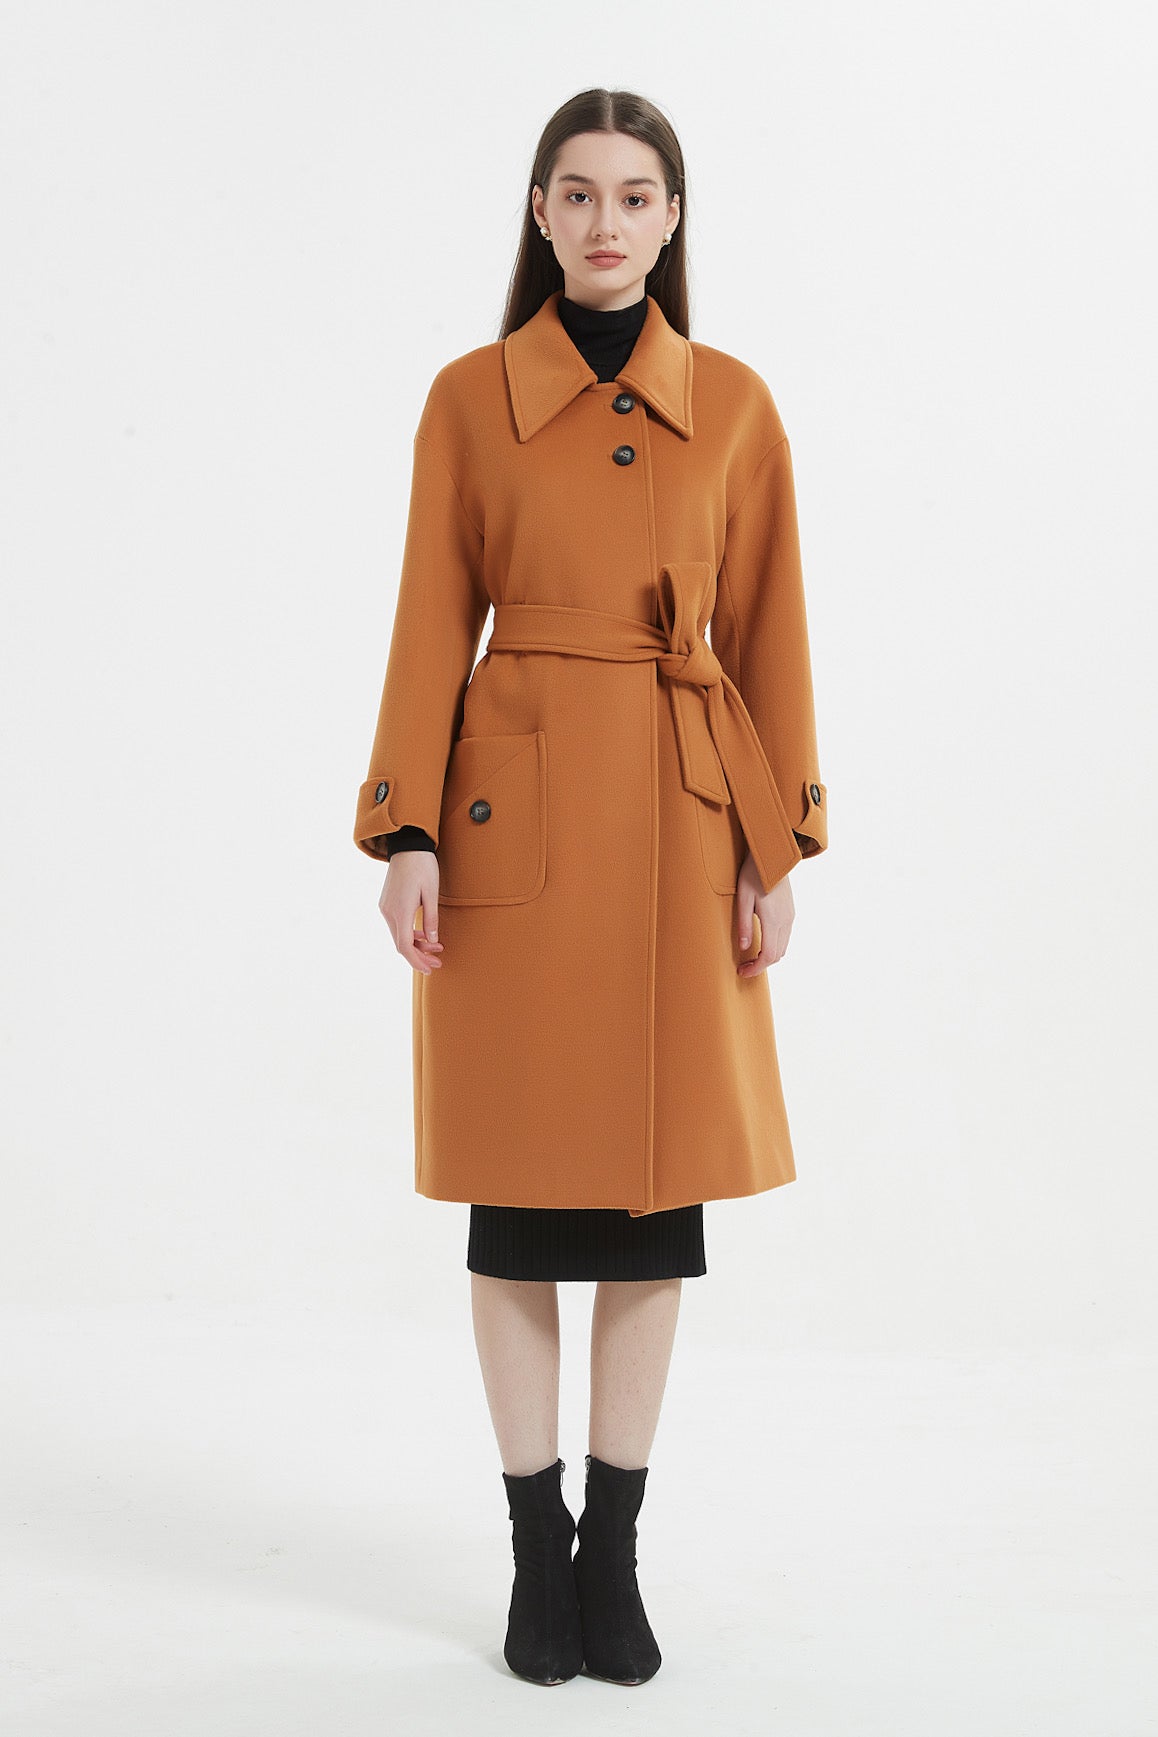 SKYE Shop Chic Modern Elegant Timeless Women Clothing French Parisian Minimalist Annabelle Long Wool Coat 4